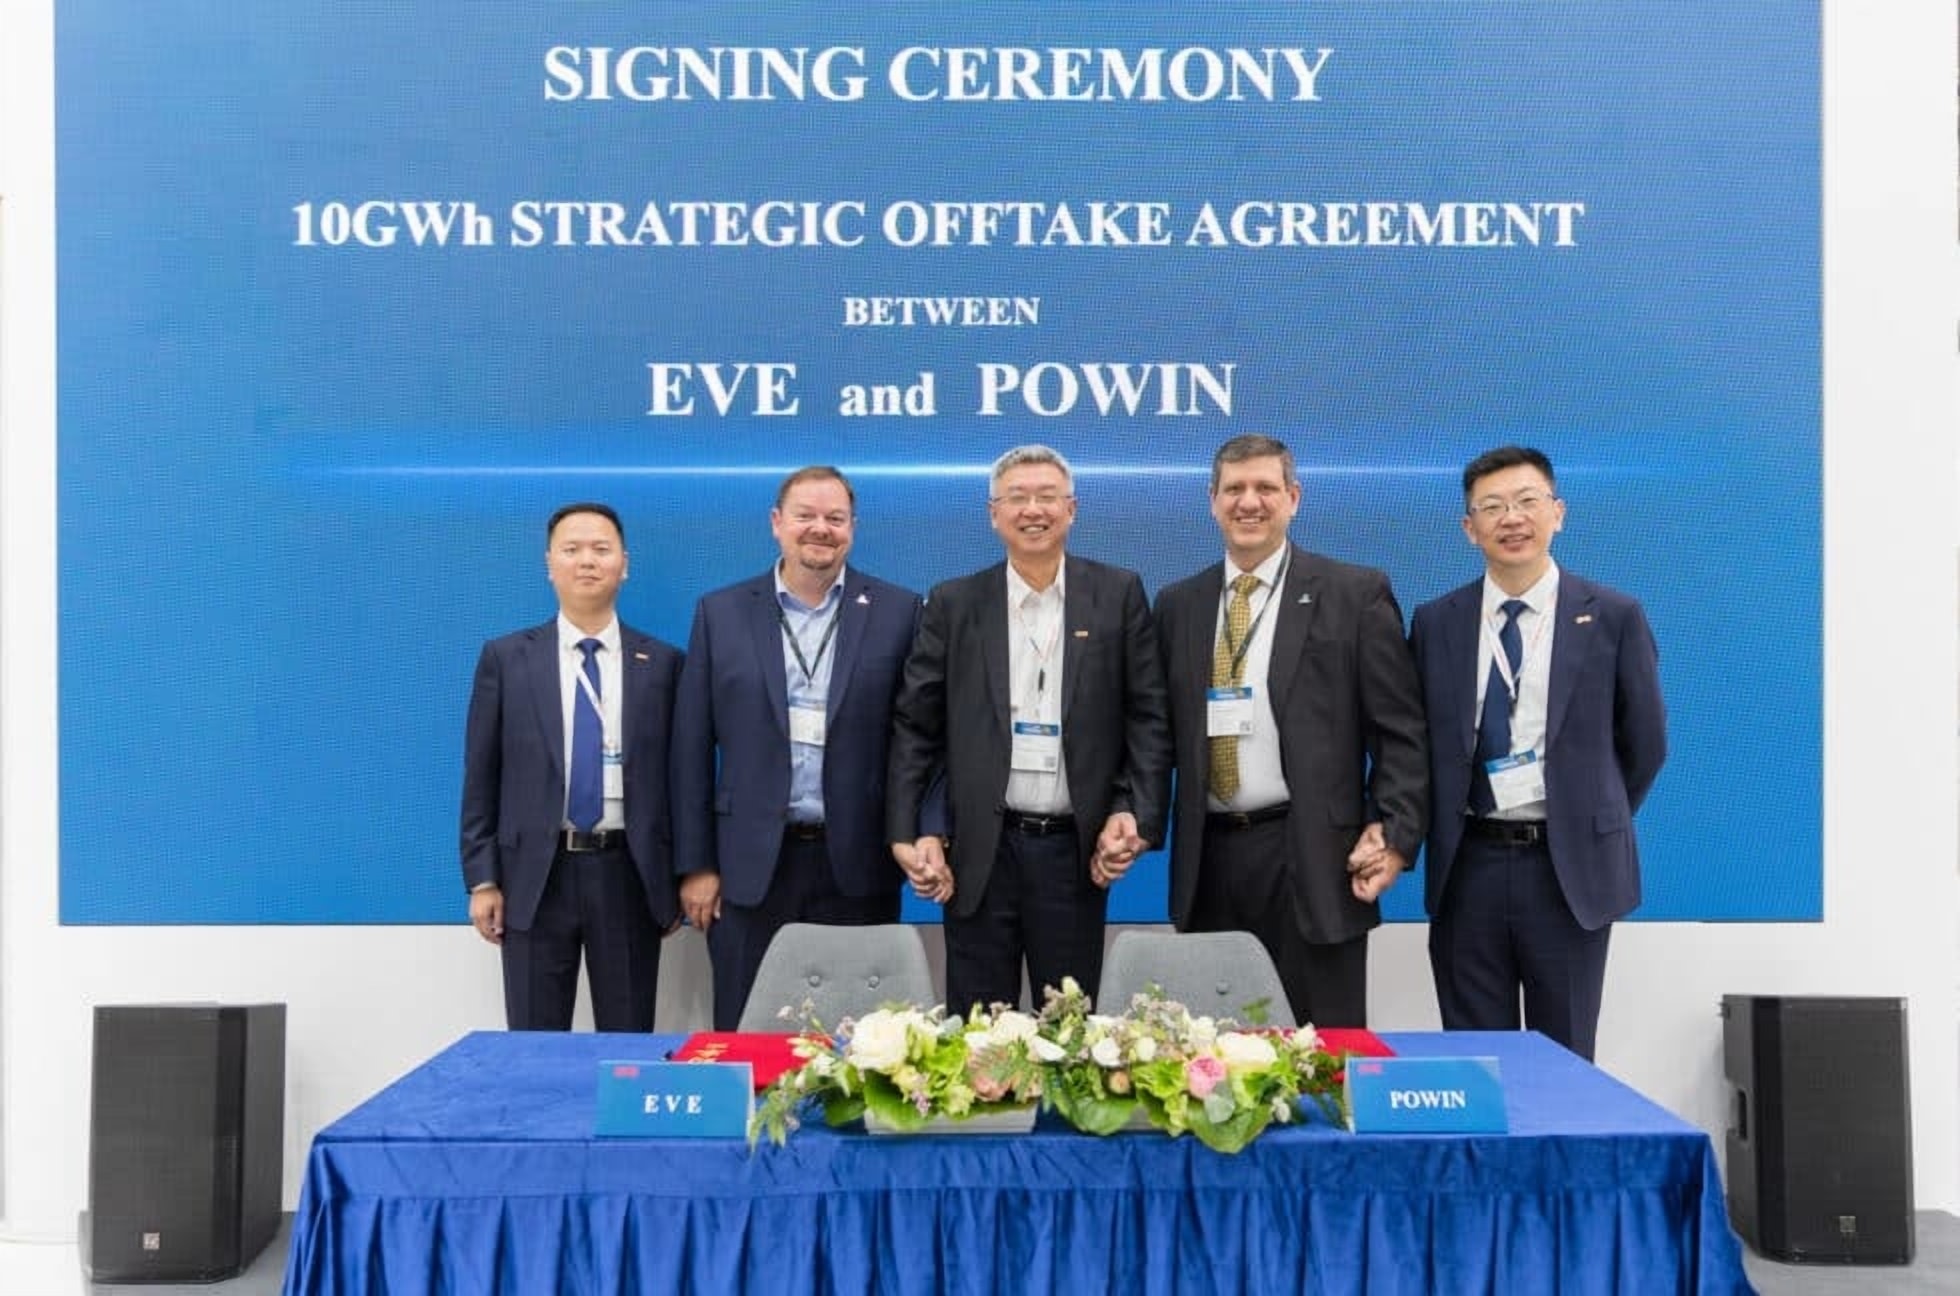 KnowESG_Powin's 10gwh agreement